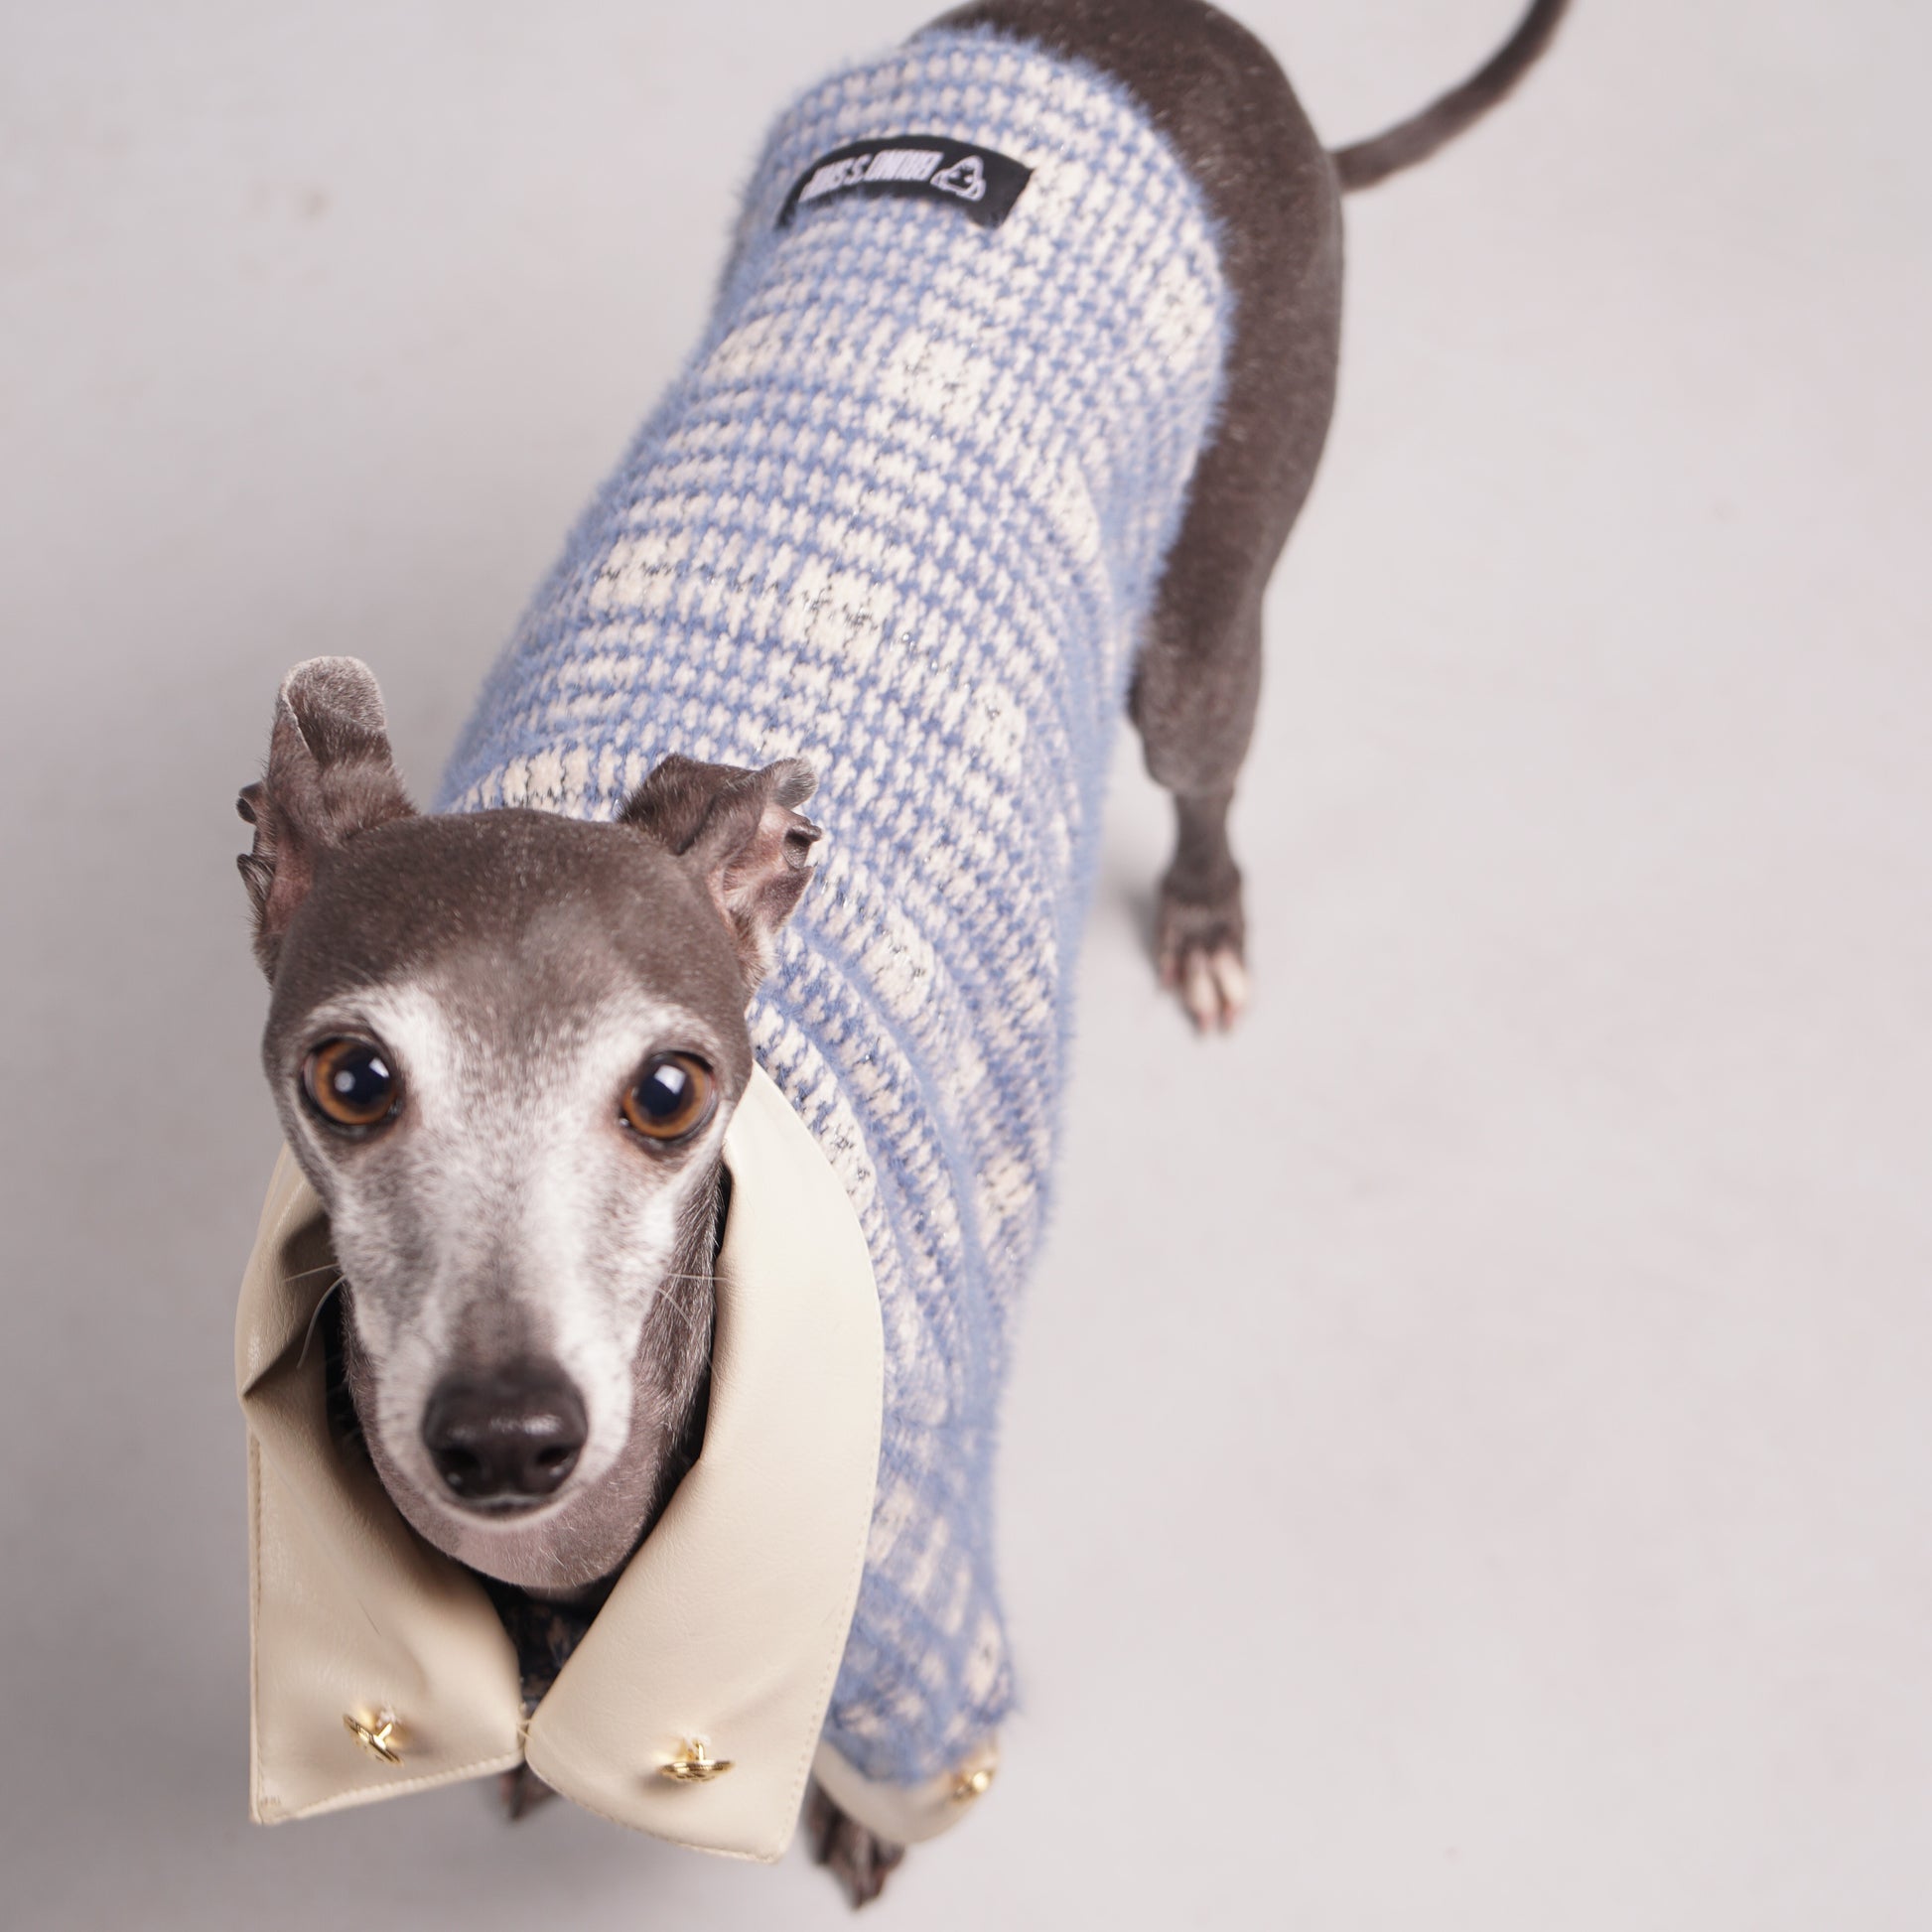 Pet clothing, Pet fashion, luxury dog clothing, luxury dog fashion, knitted jumper for Italian Greyhounds and Whippets.